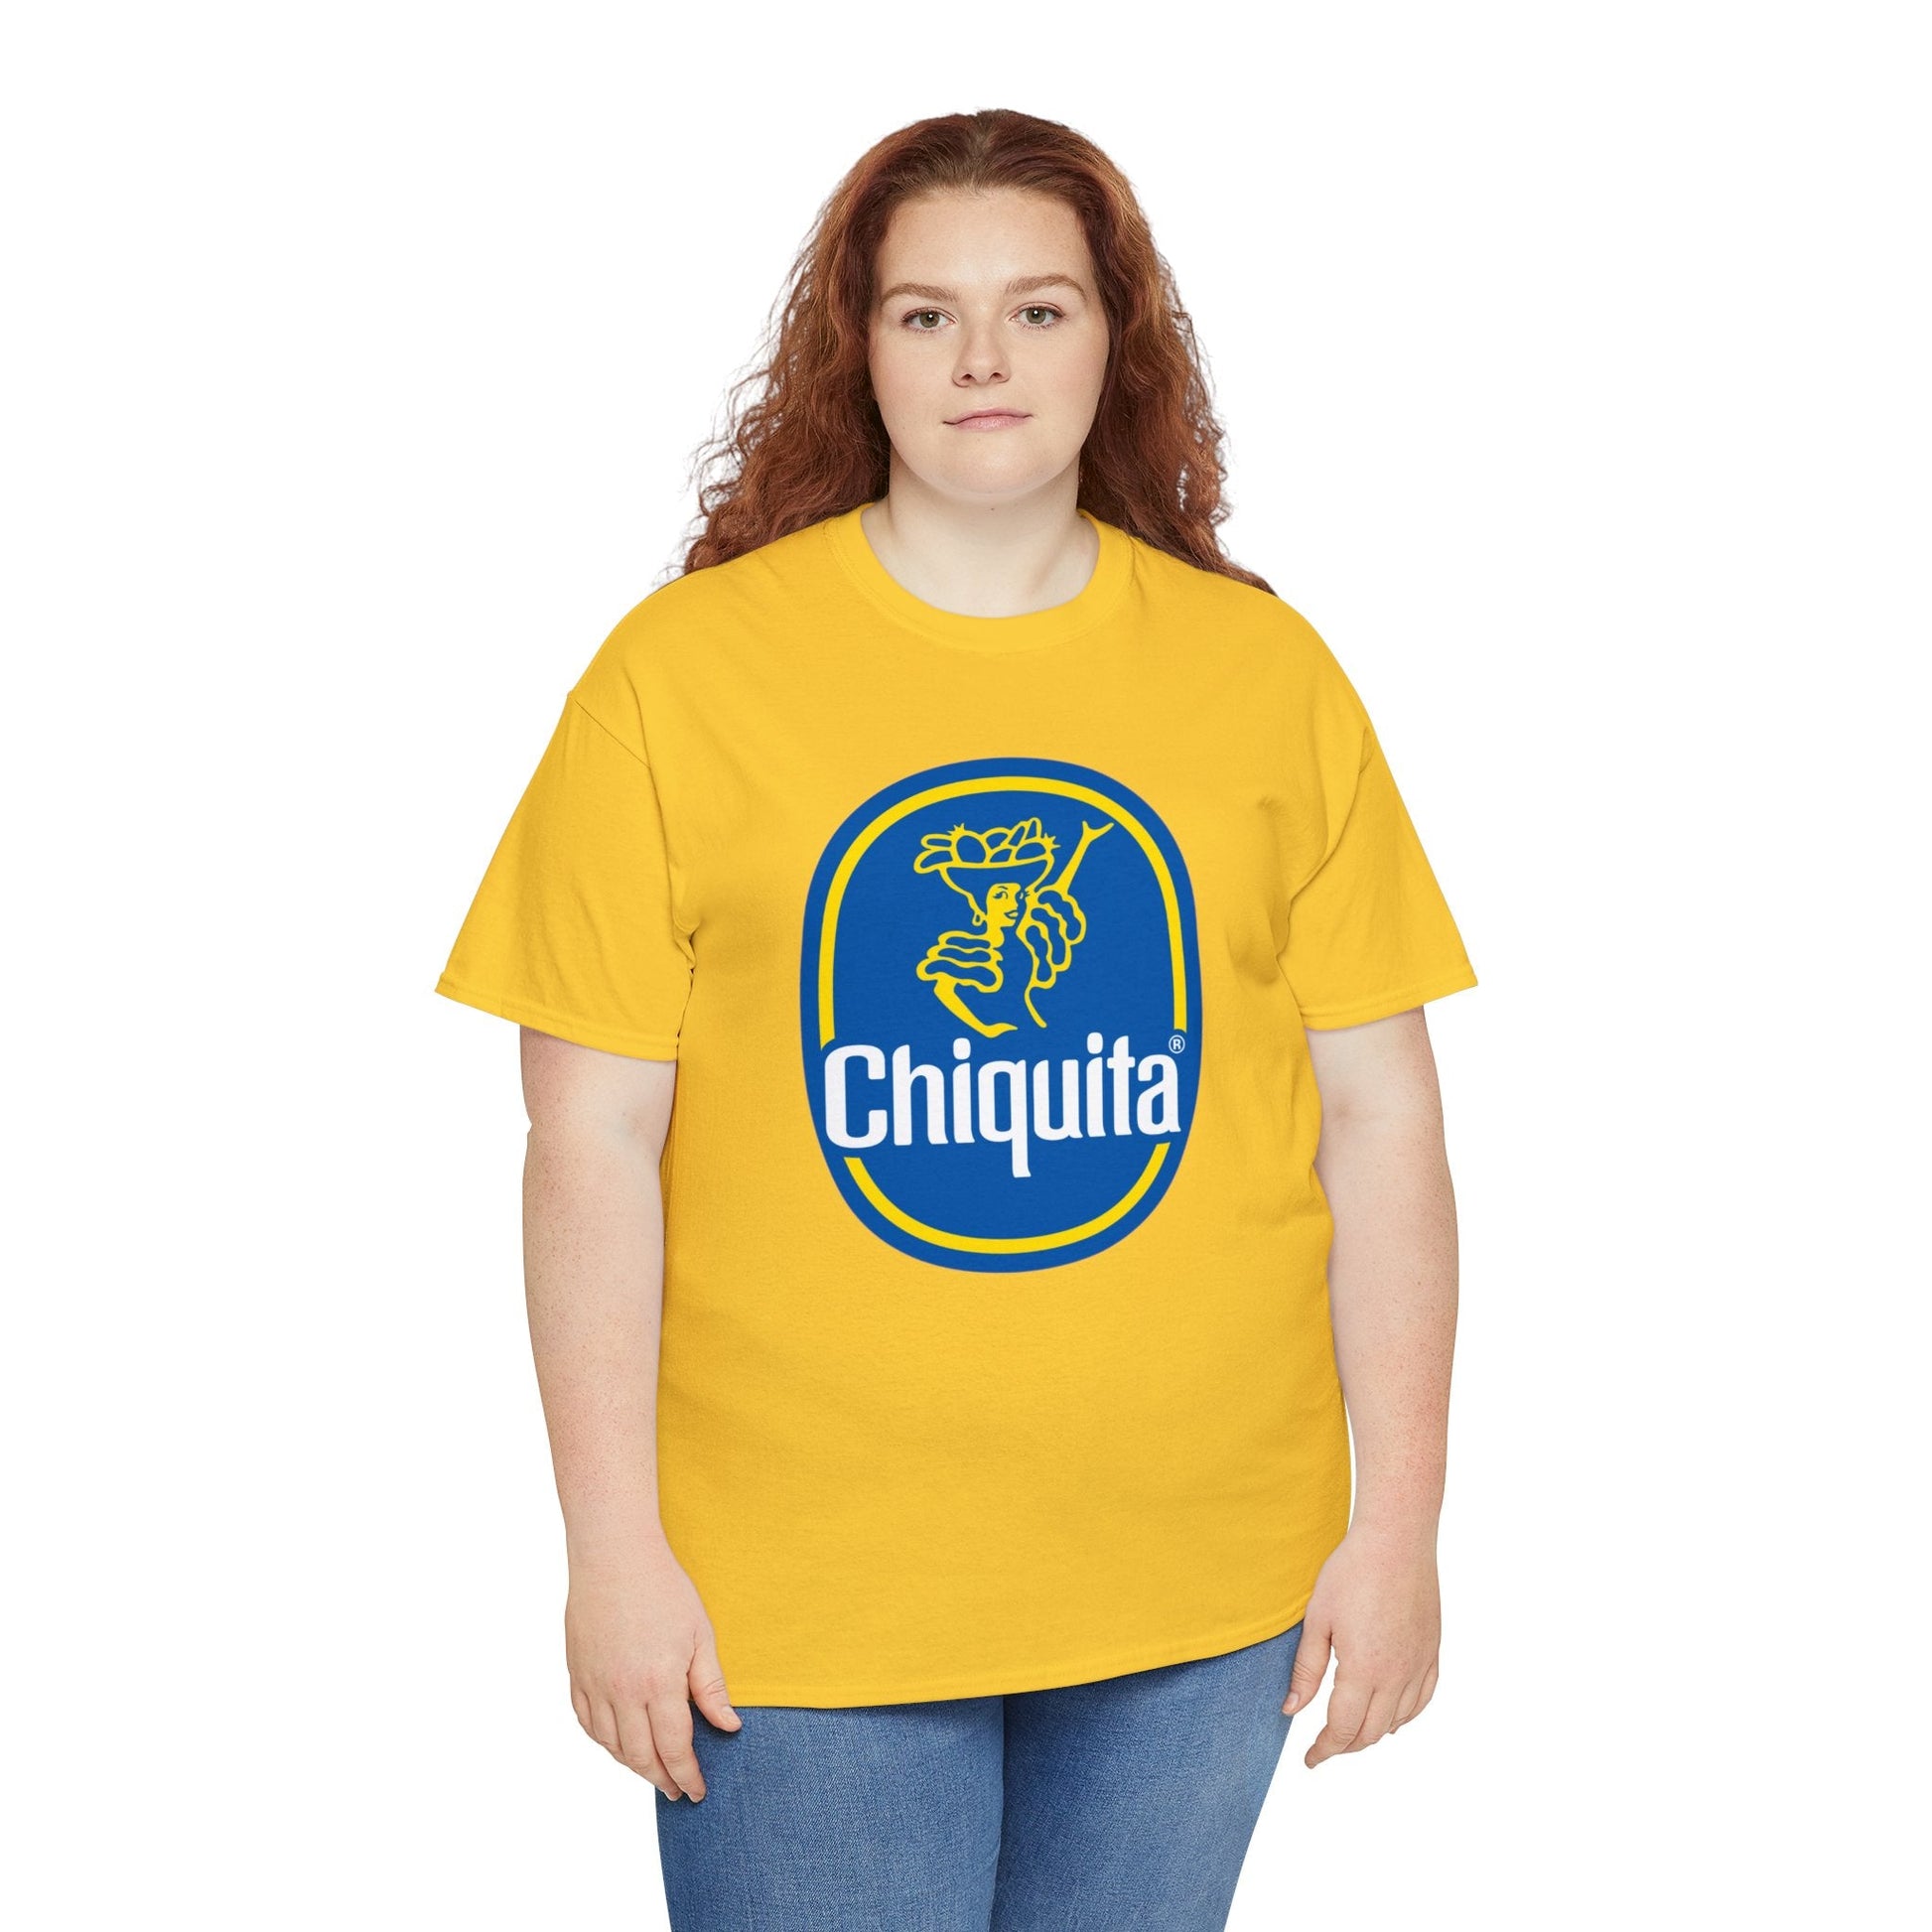 Chiquita Banana Essential T-Shirt - RetroTeeShop